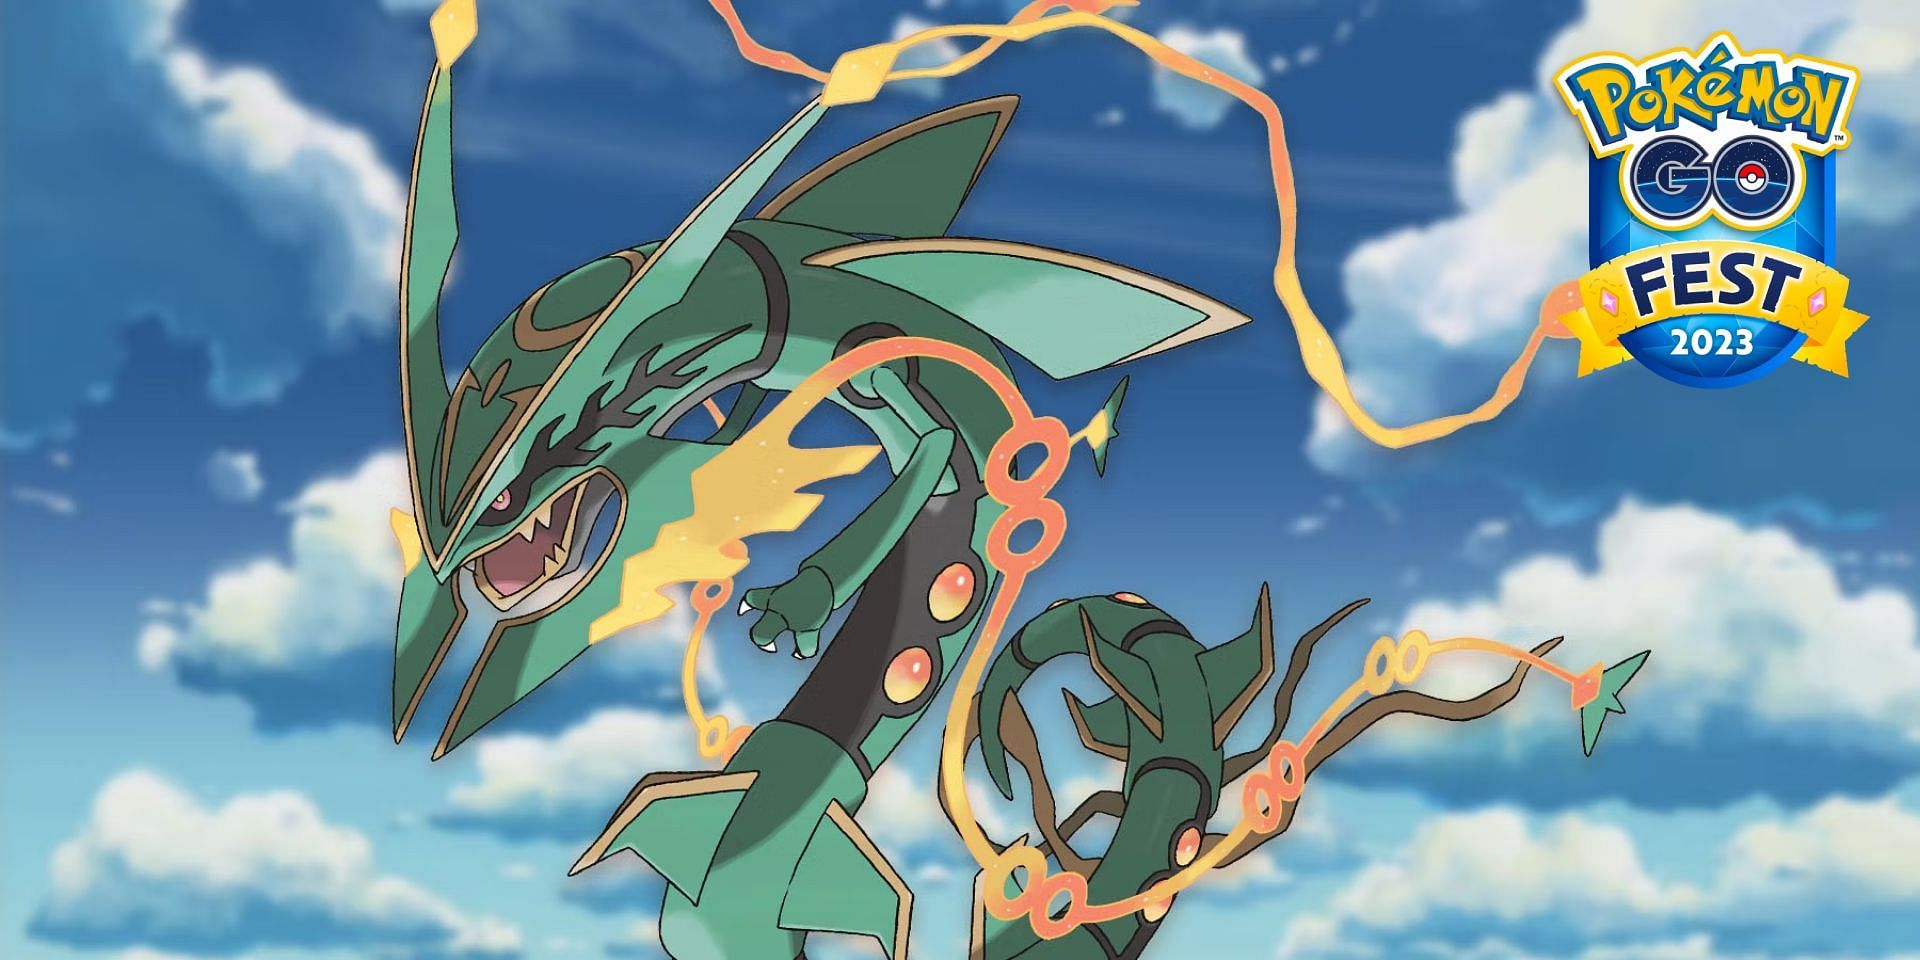 Master the Art of Obtaining Mega Rayquaza in Pokémon Go. Gaming